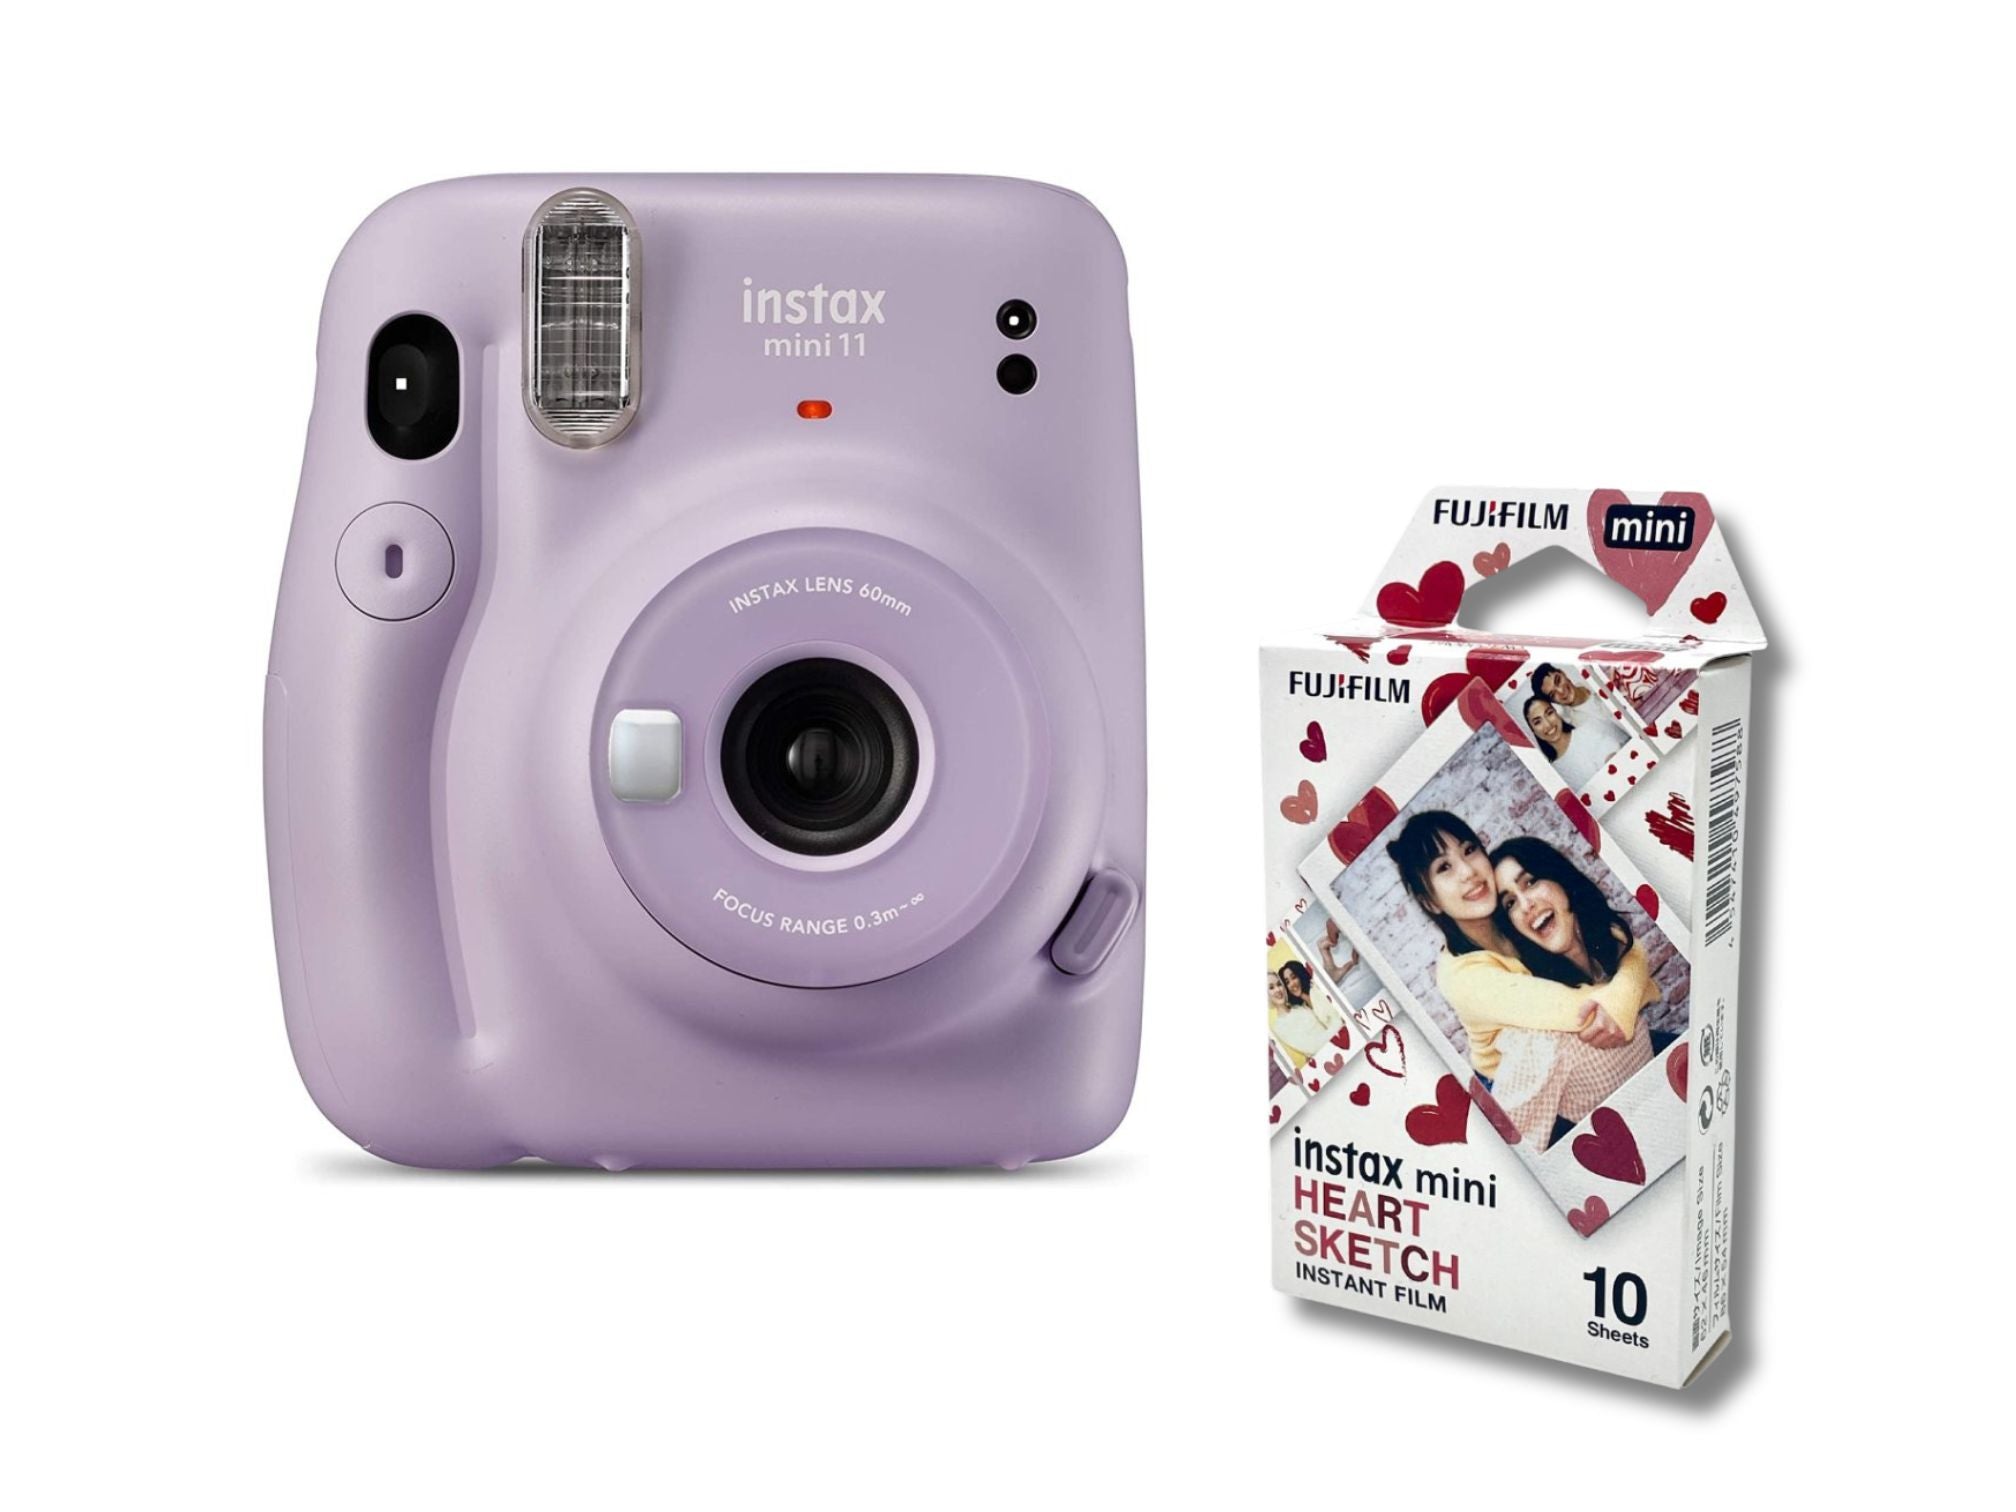 Fujifilm Instax Mini 11 Camera and Sketch Heart Instax Film Bundle